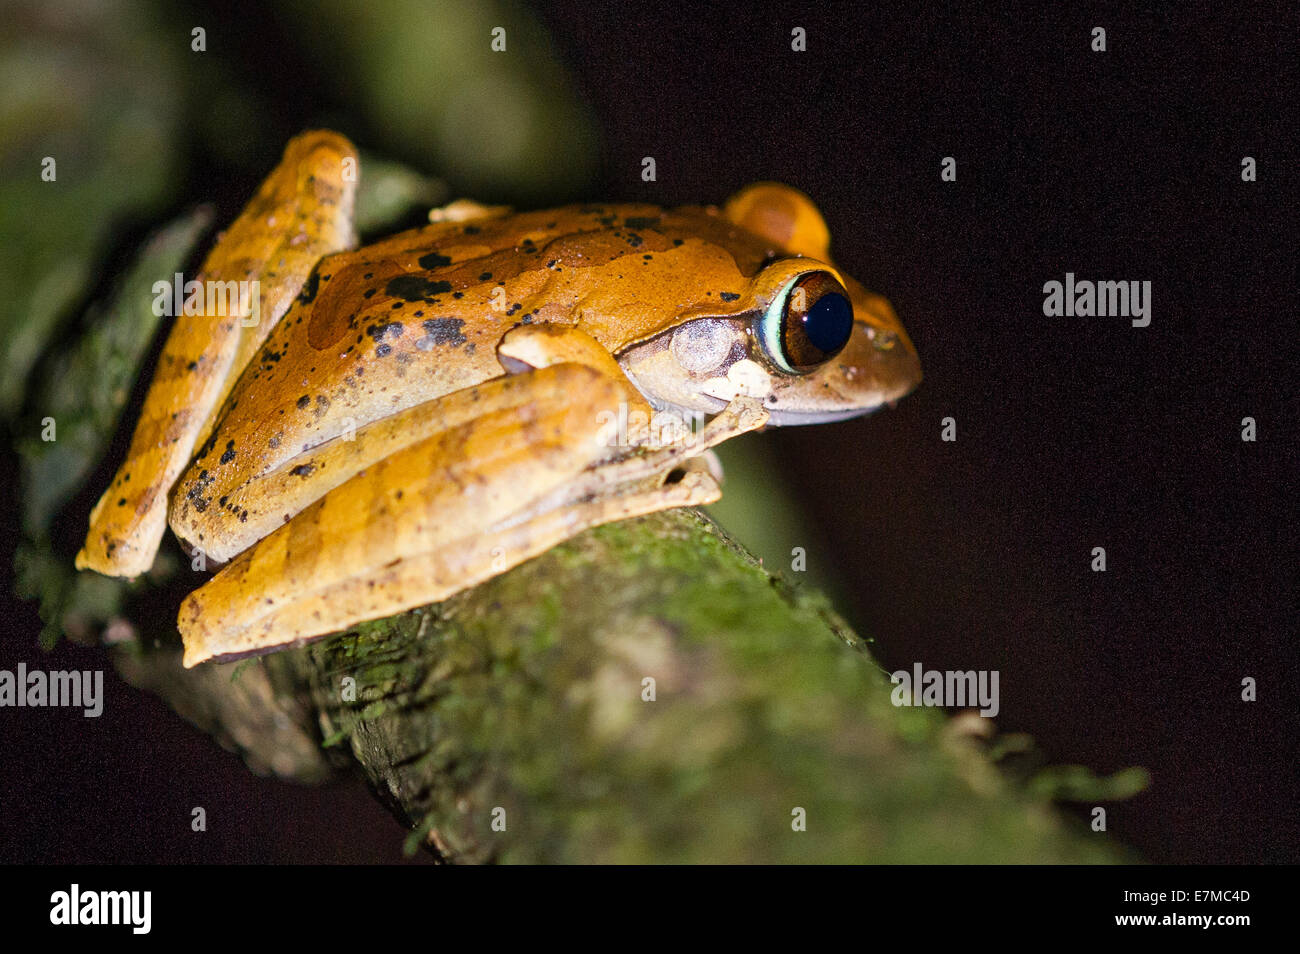 A Madagascar Bright-eyed frog Stock Photo